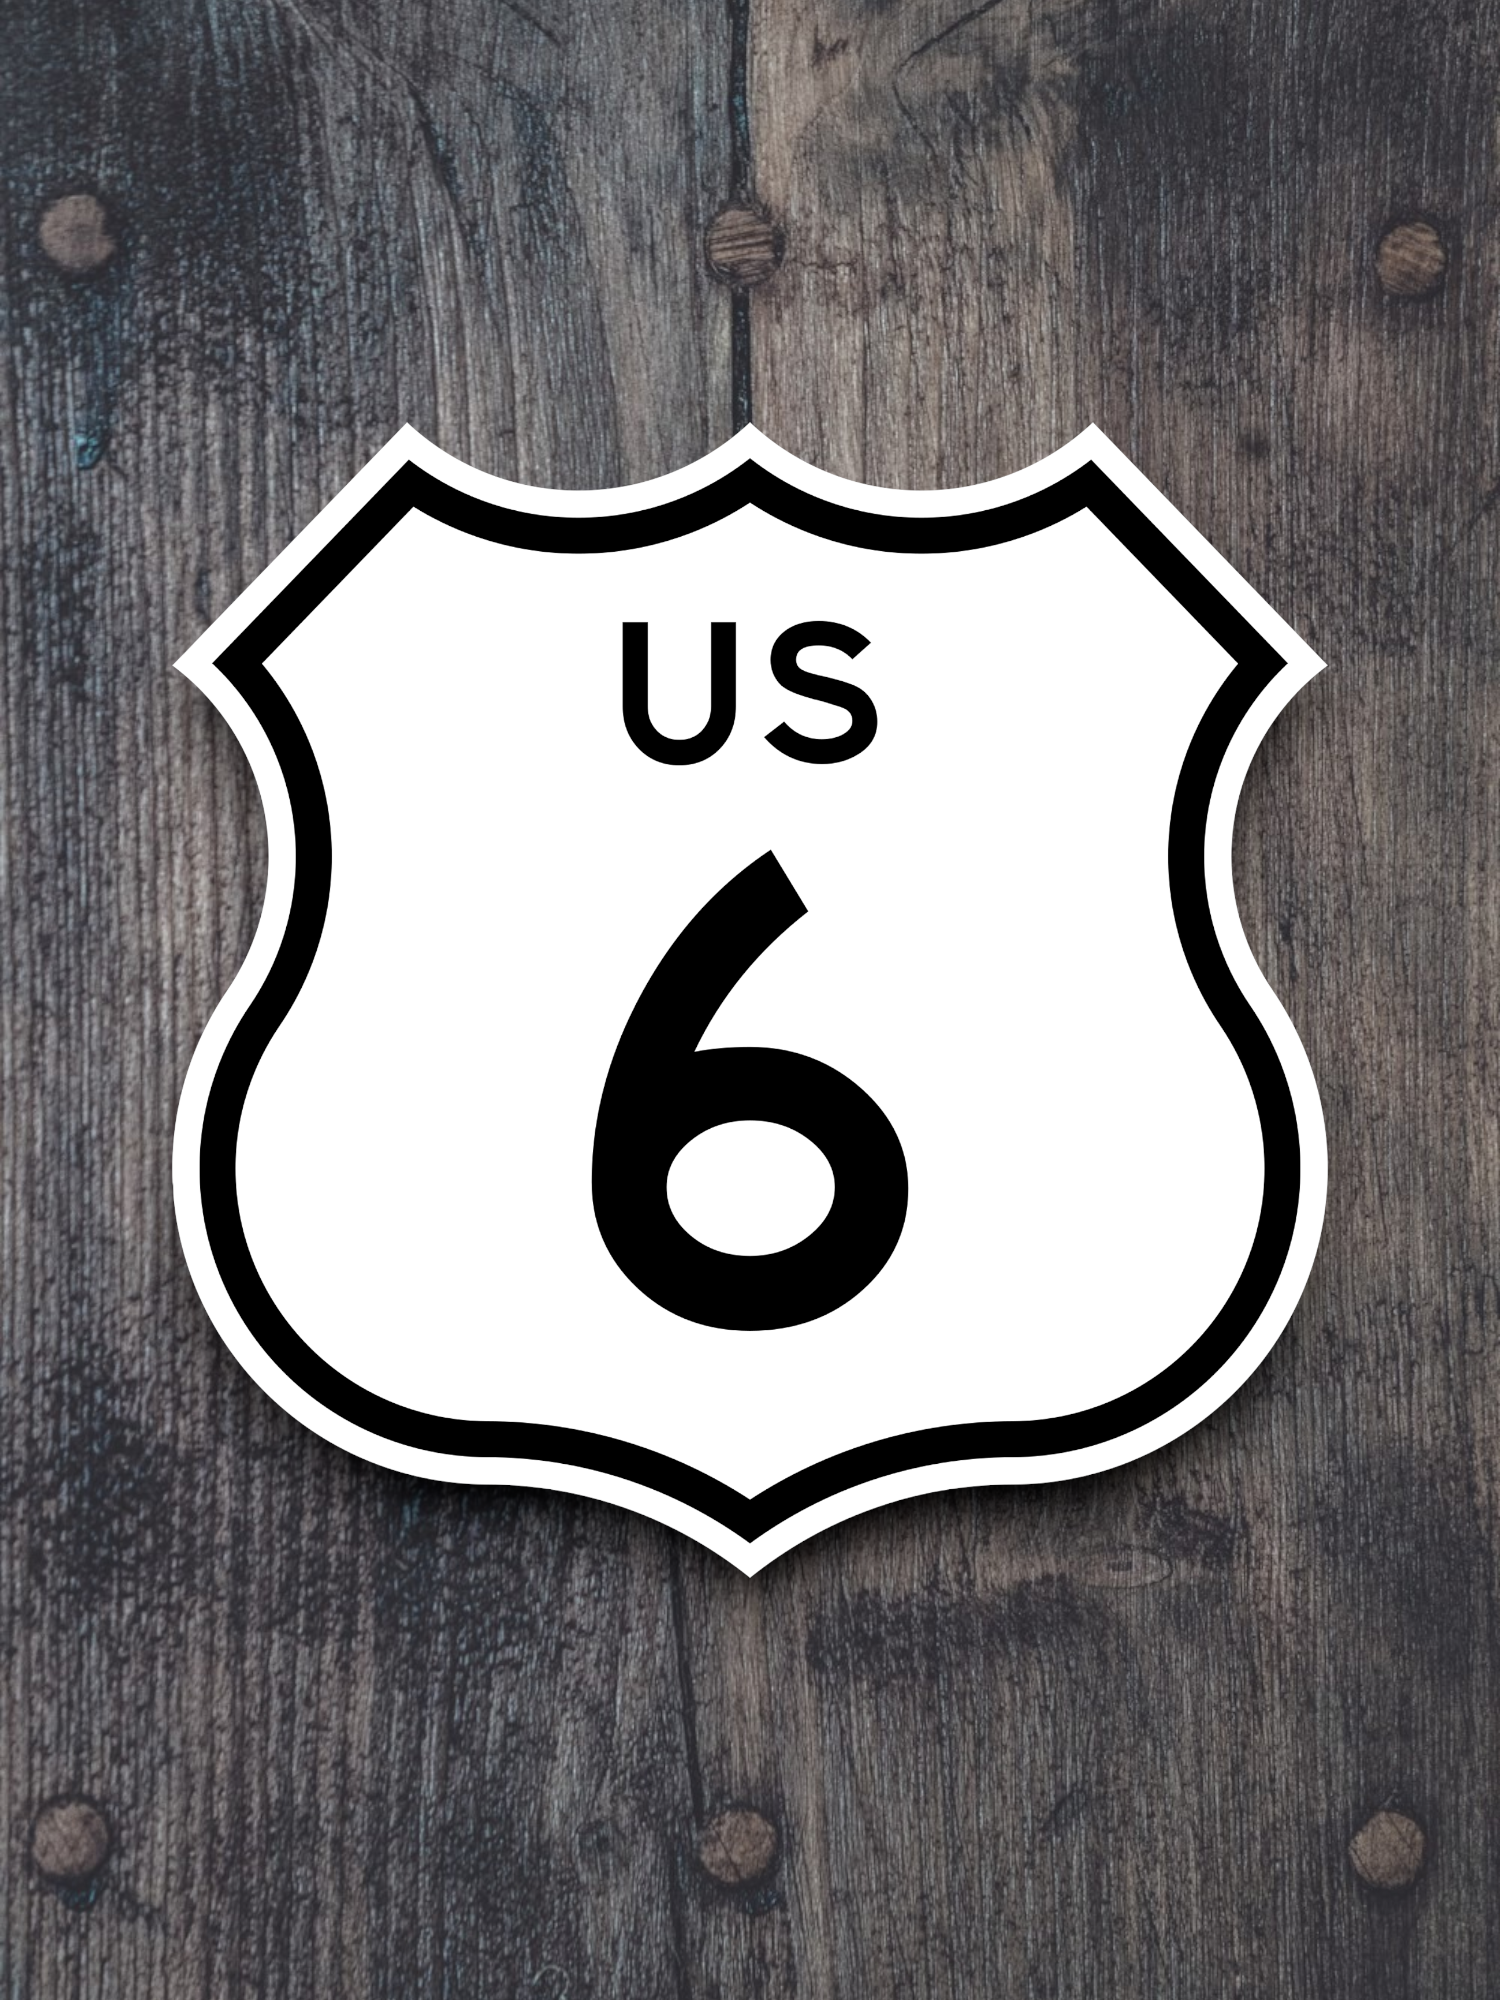 U.S. Route 6 - Alt Road Sign Sticker